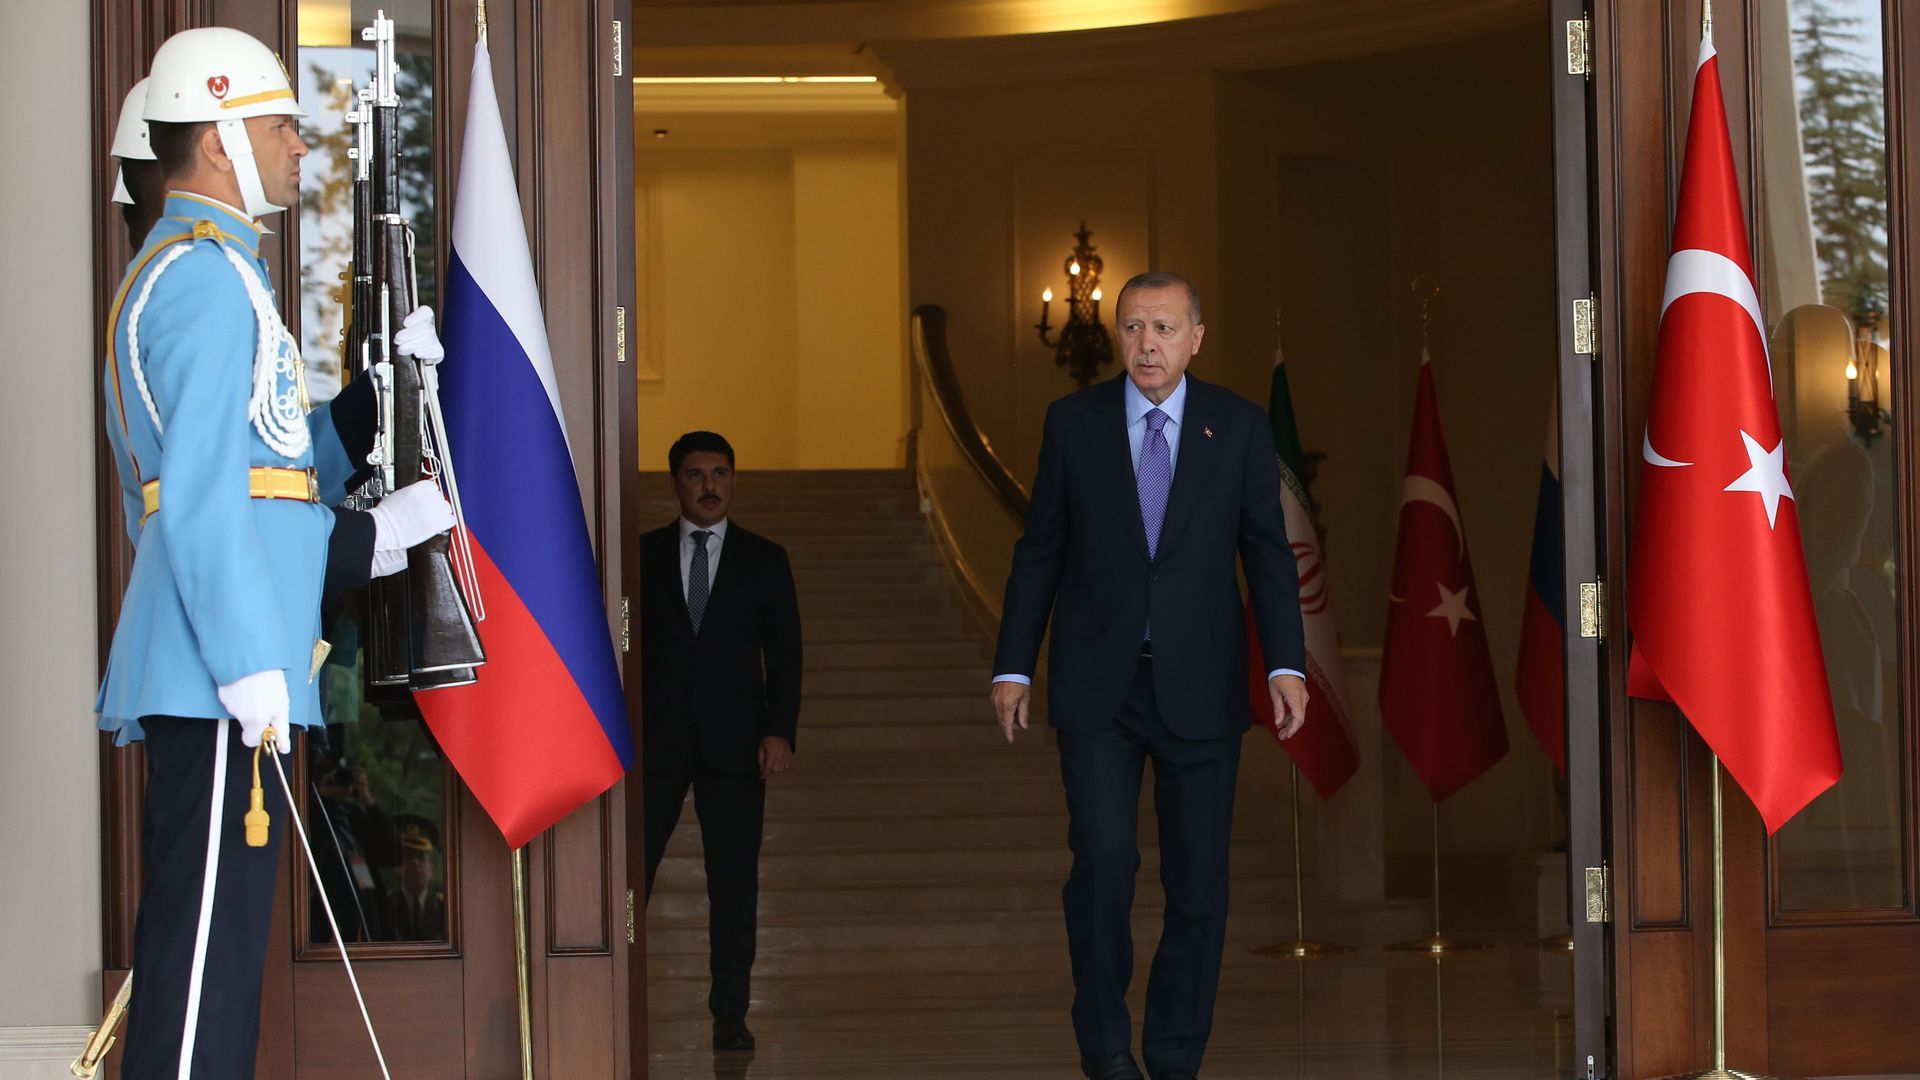 Erdoğan awaits the arrival of Vladimir Putin in Ankara, 2019. Photo: Mikhail Svetlov/Getty Images